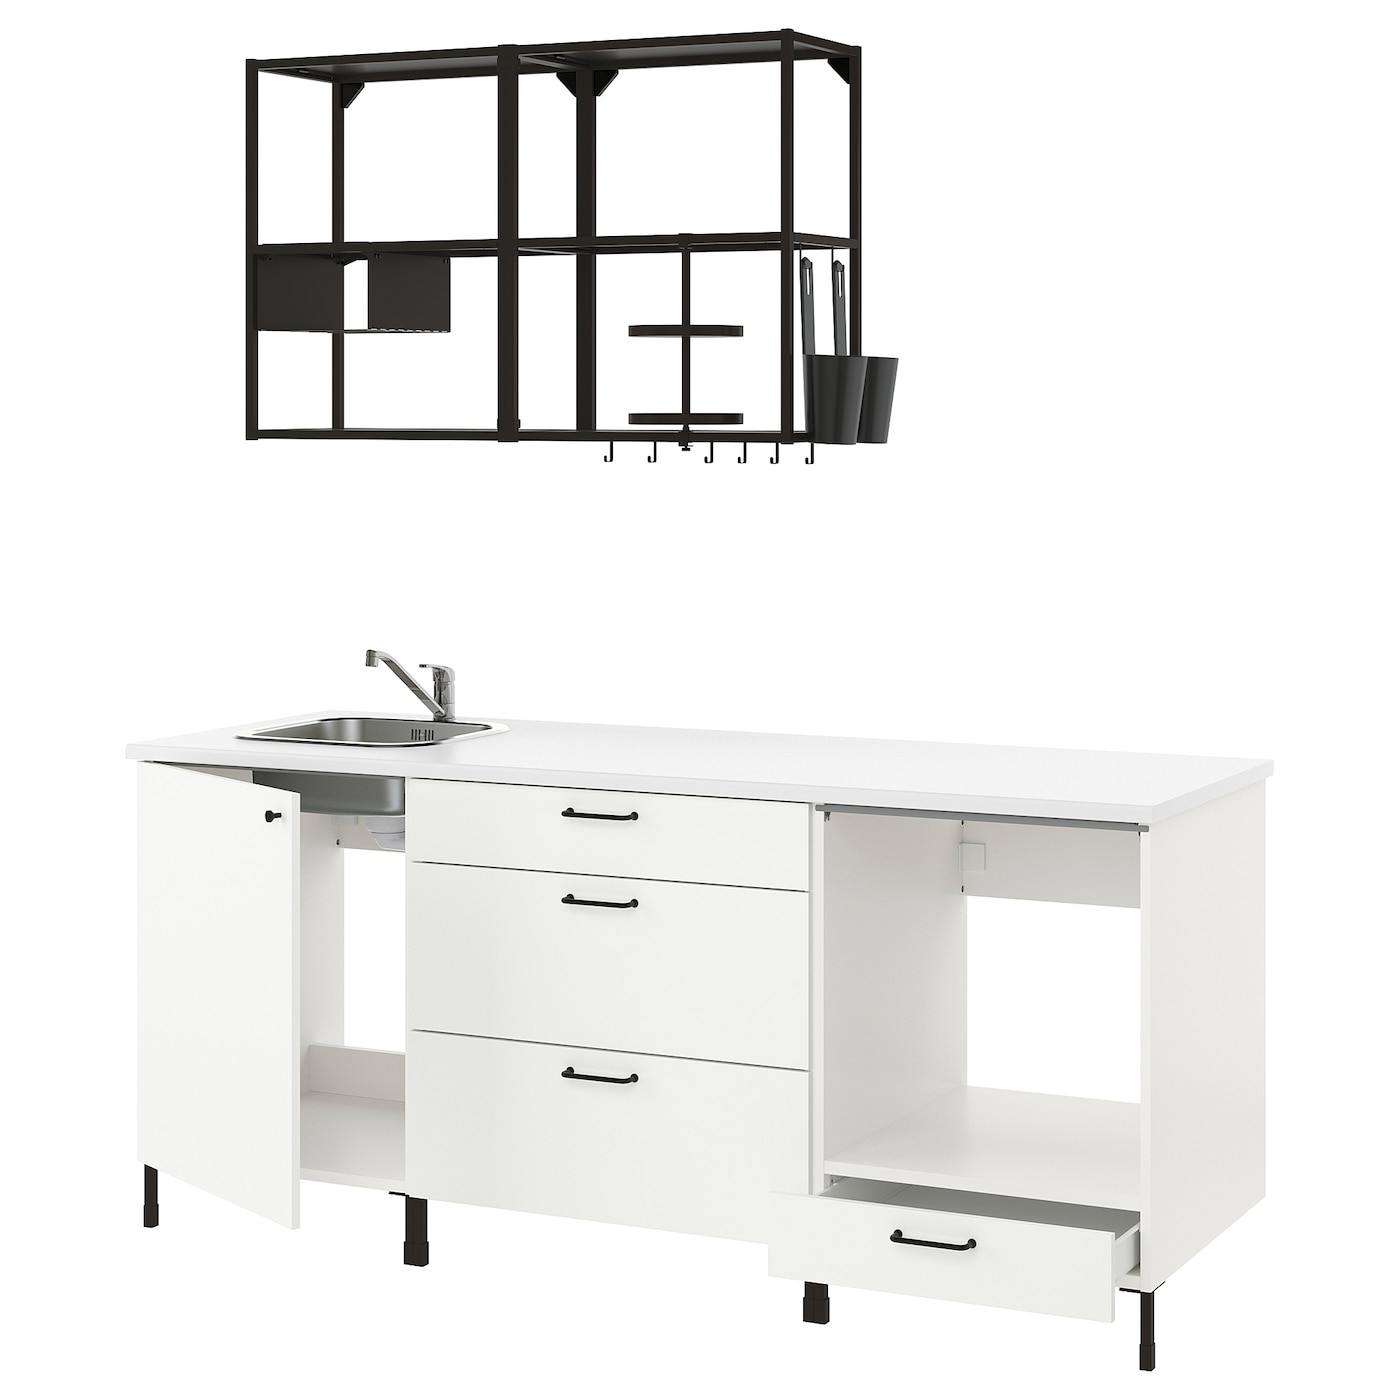 Кухня -  ENHET  IKEA/ ЭНХЕТ ИКЕА, 203х222 см, белый/черный